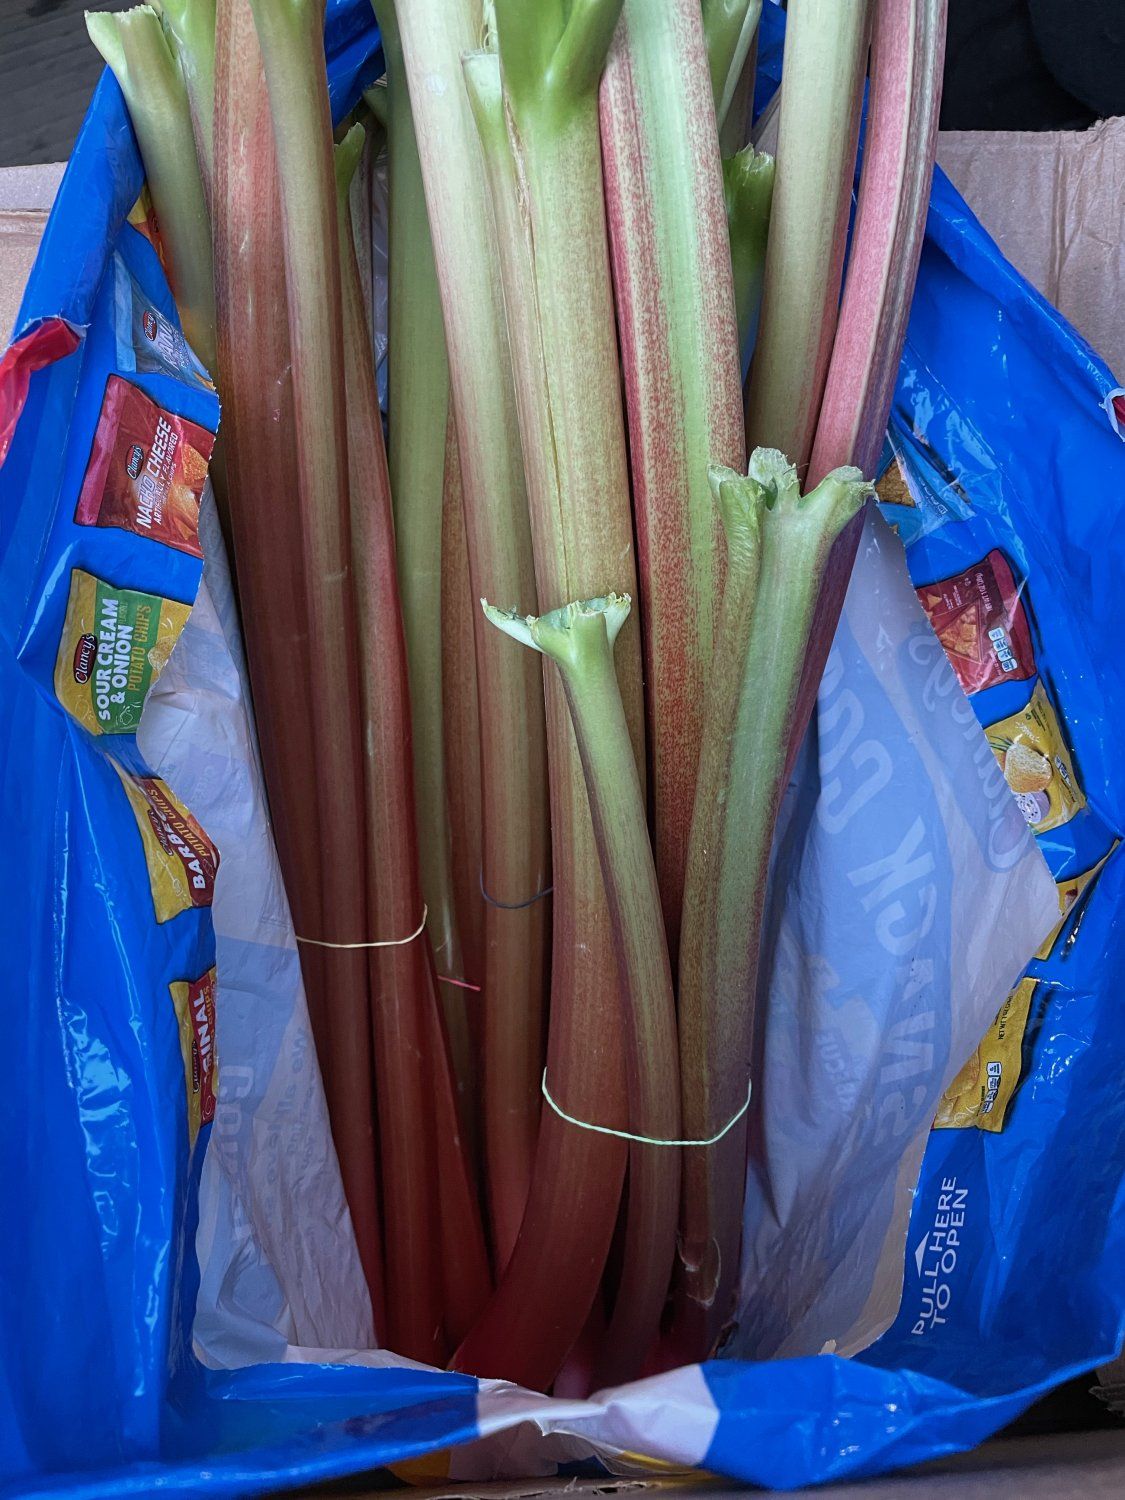 Next Happening: Rhubarb and Beet Greens Arrive!